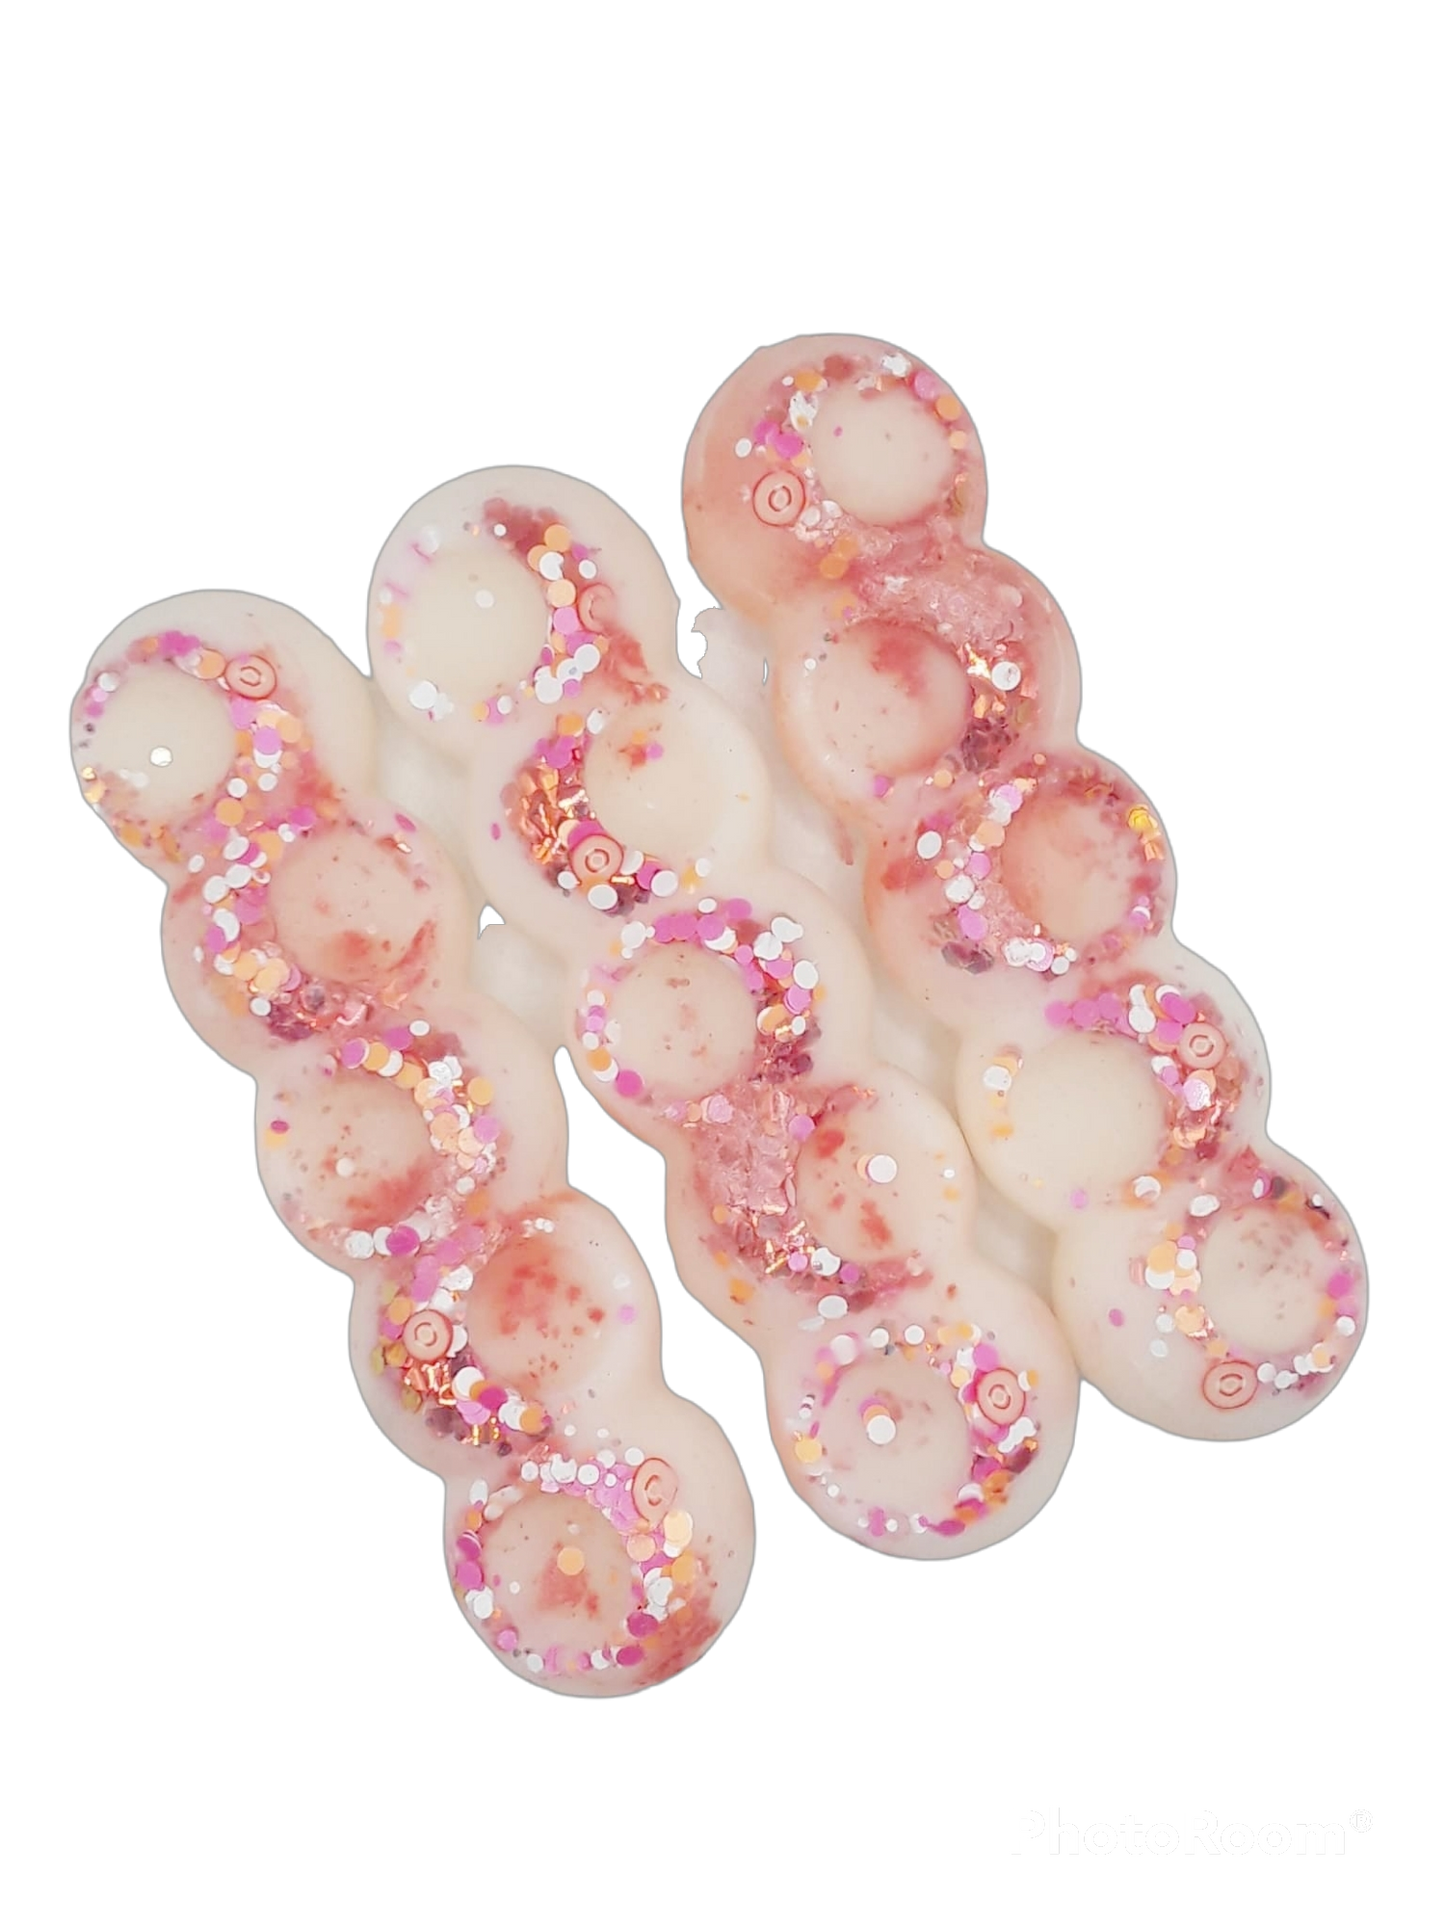 Marshmallow and white peach bubble bar wax meltn